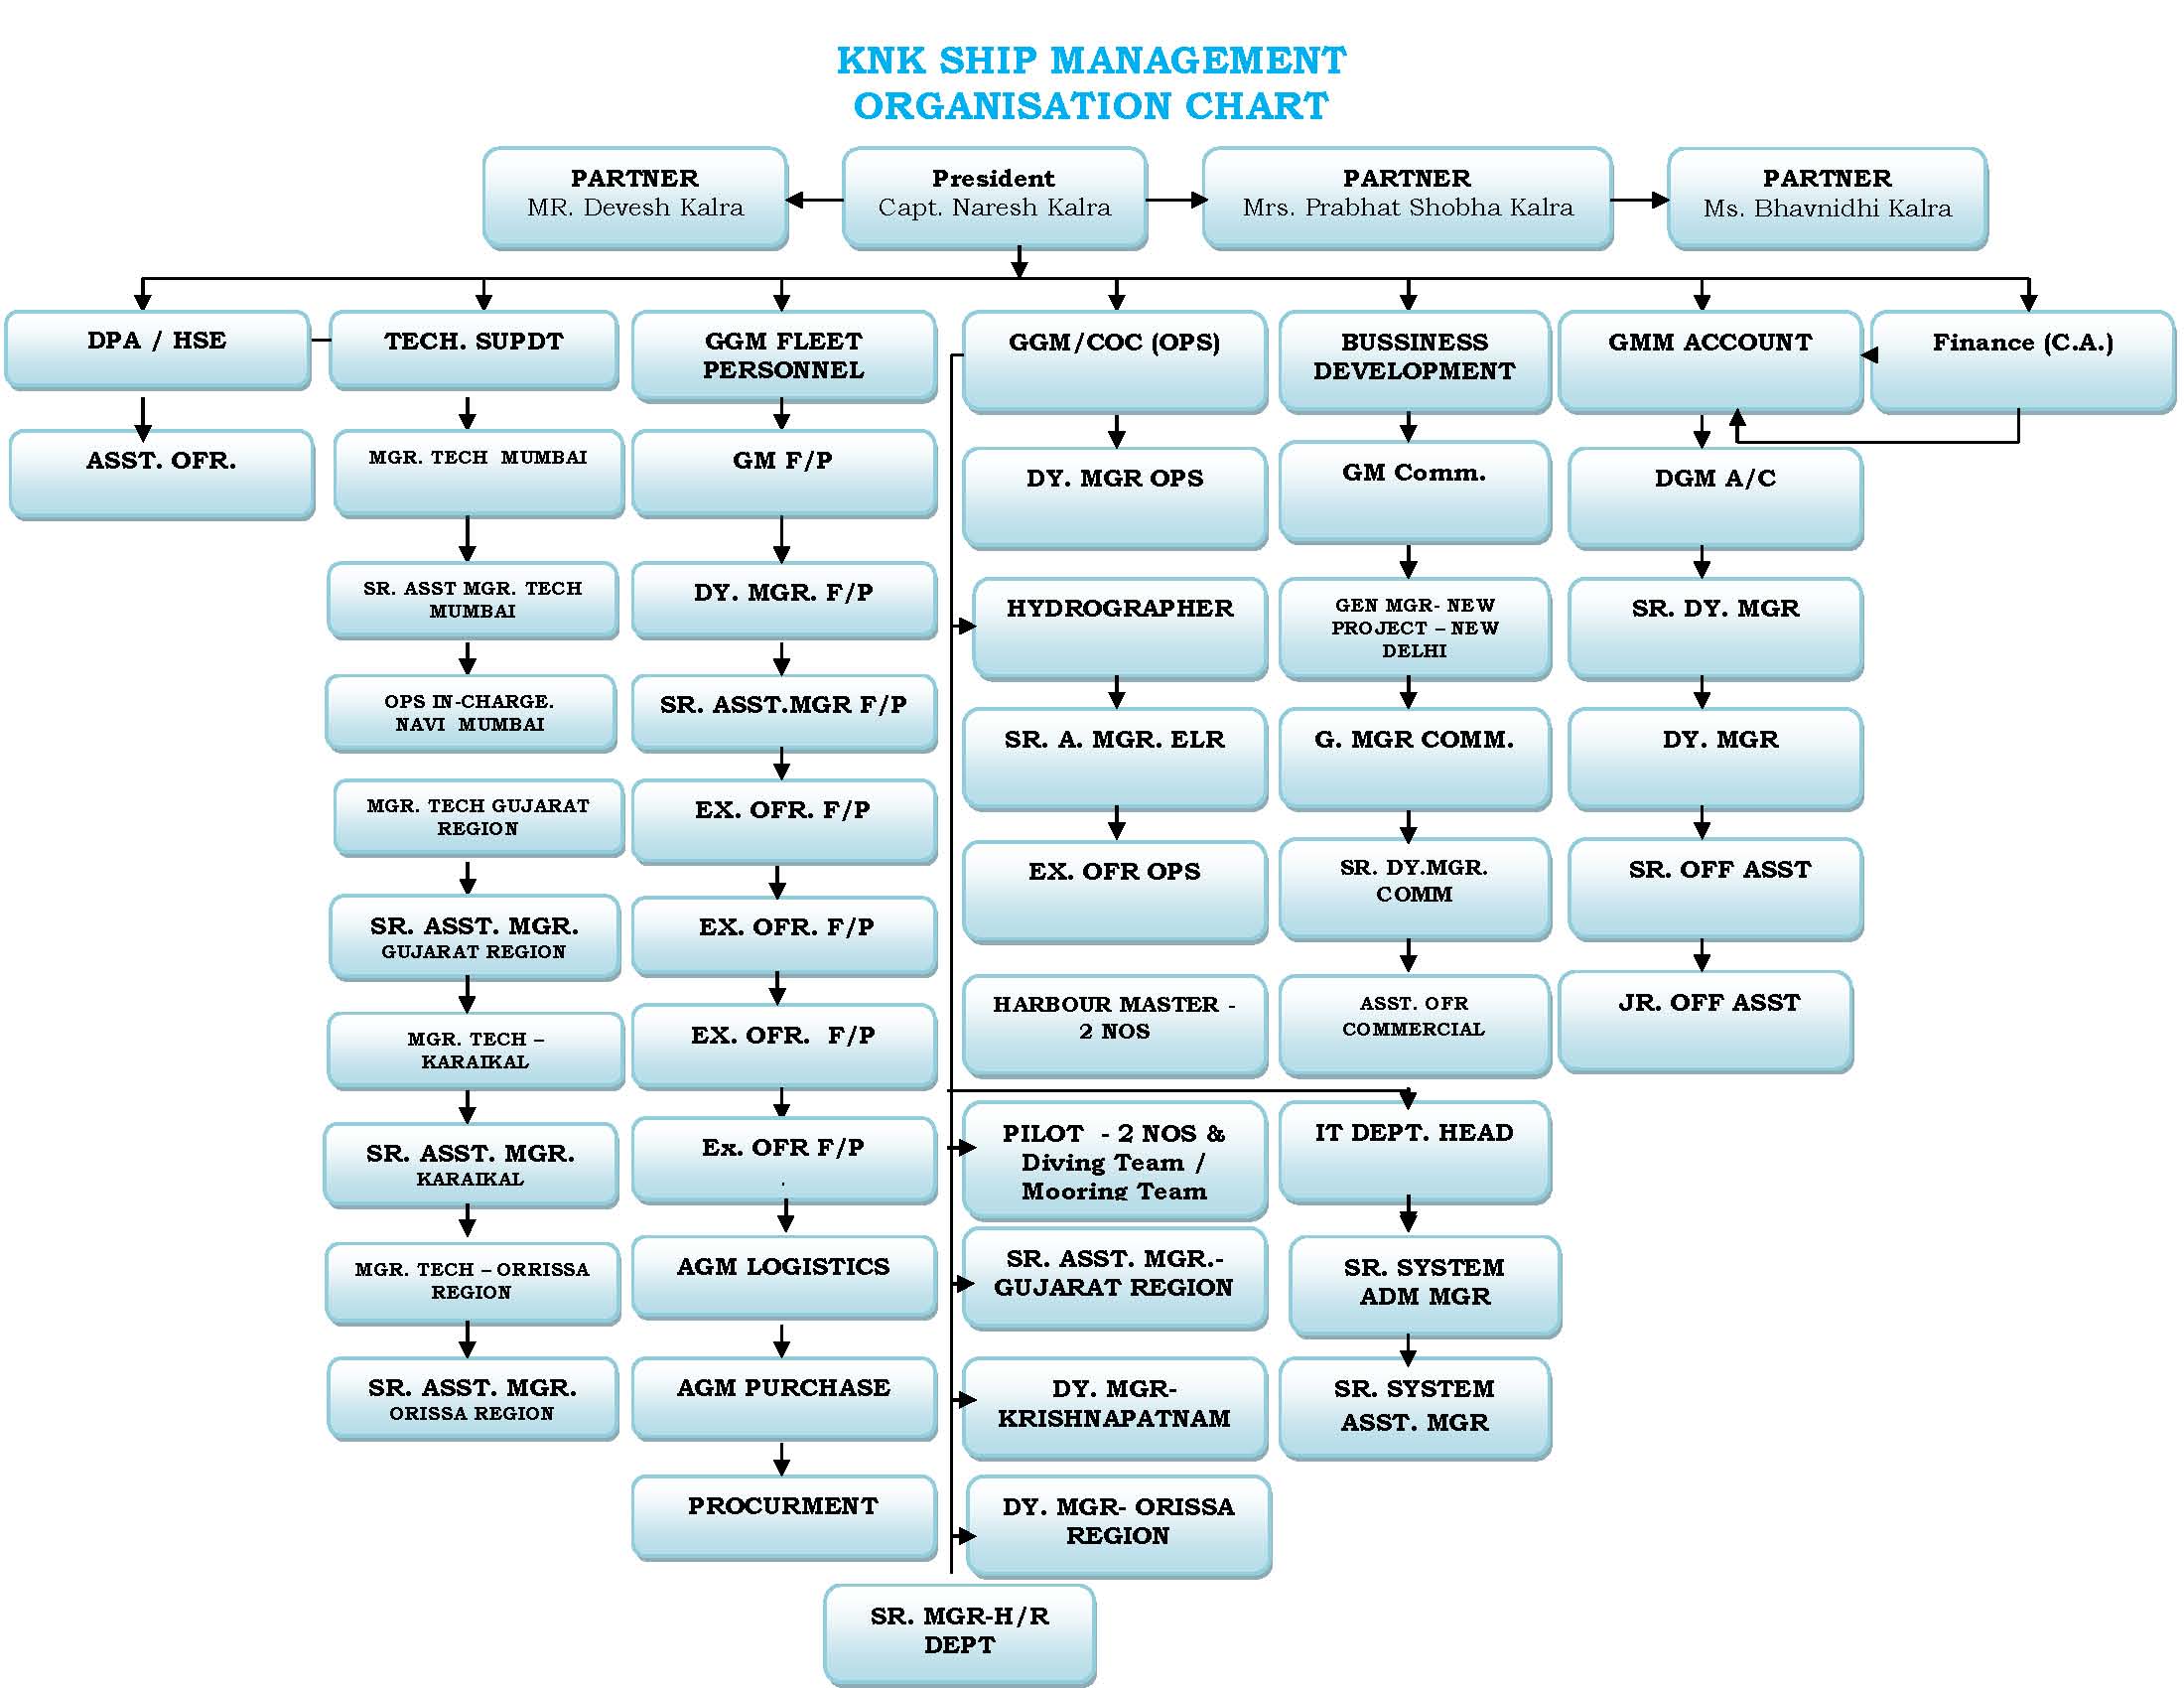 KNK Ship Management Organization Chart